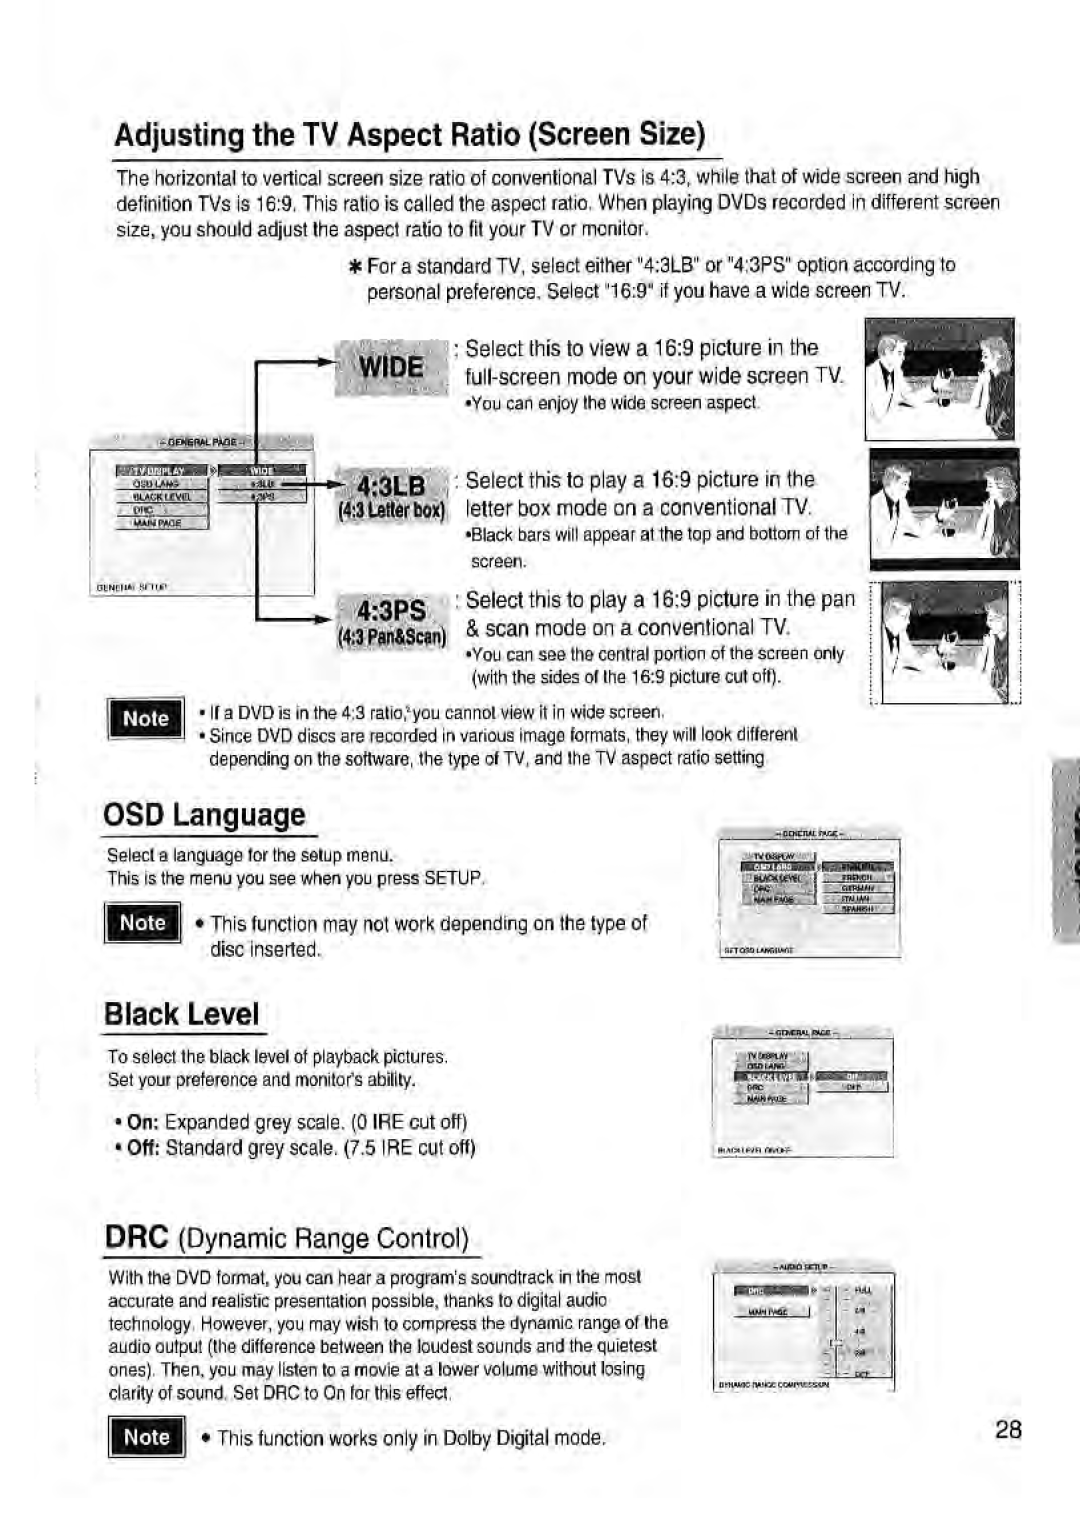 Toshiba SD-43HK Adjusting the TV Aspect Ratio Screen Size, Black Level, DRC Dynamic Range Control, OSD Language 